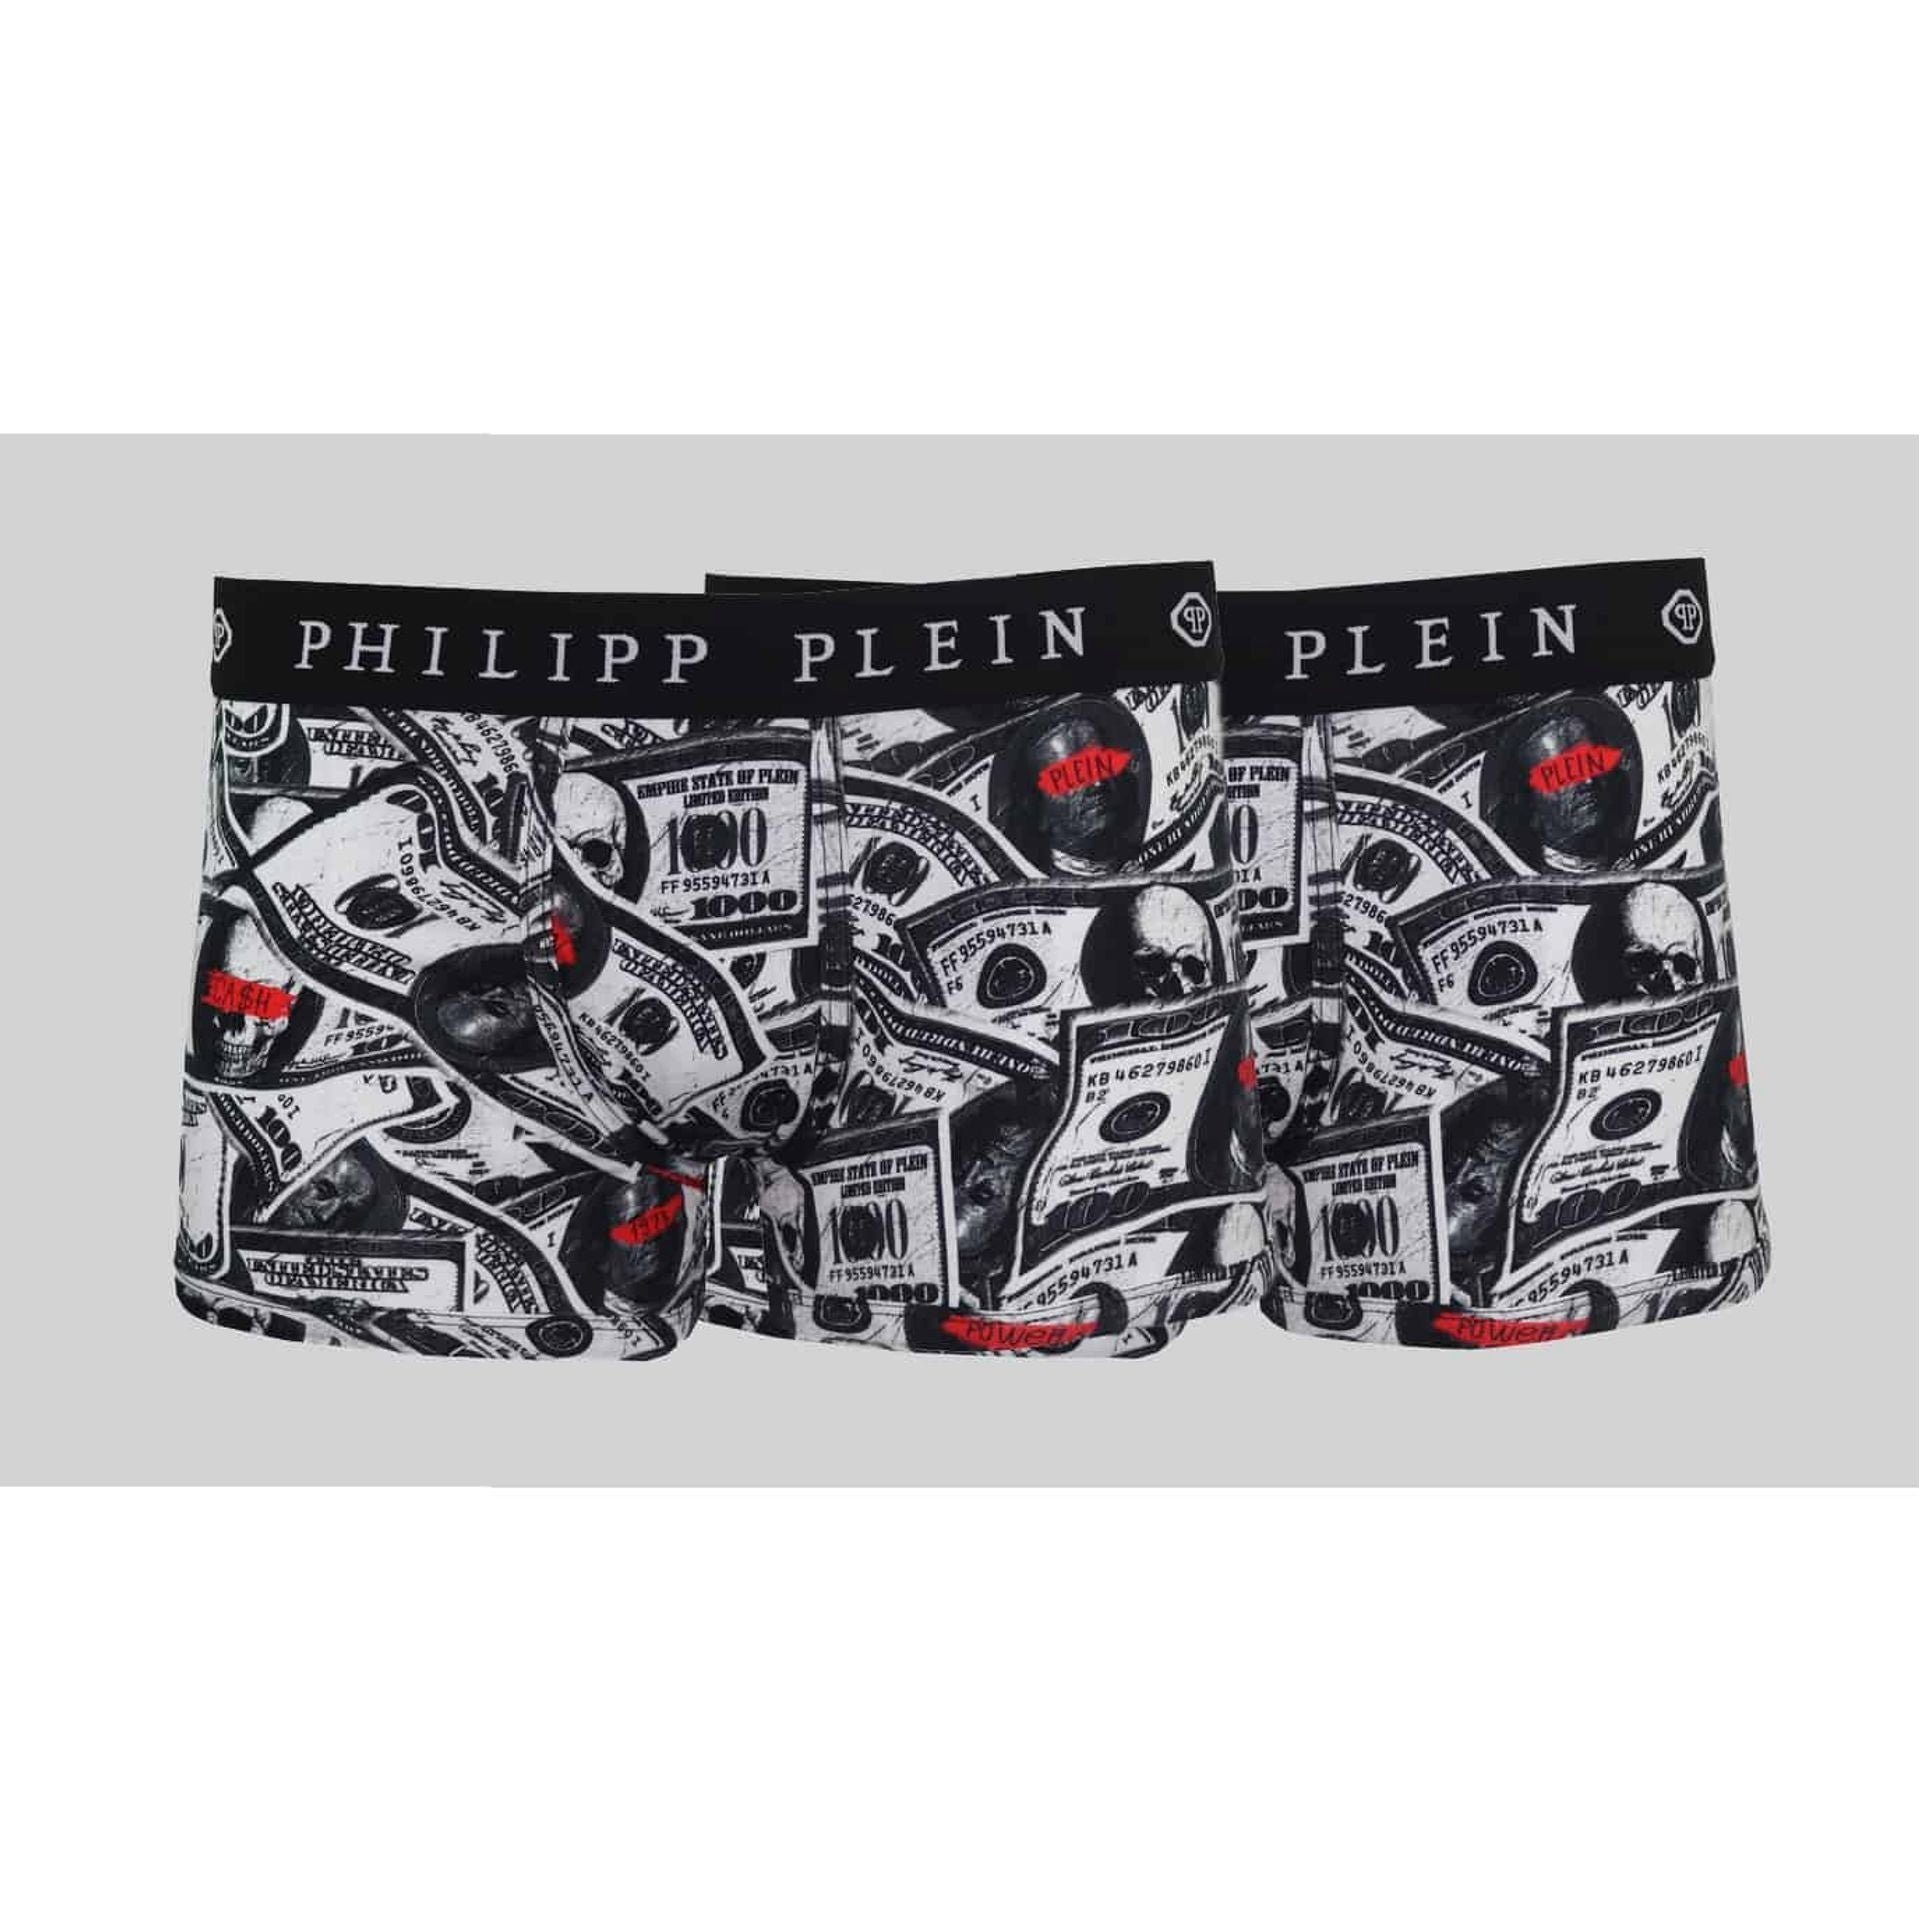 Philip Plein PHILIPP PLEIN Boxershorts, 2er-Pack, DOLLAR (2er-Pack)